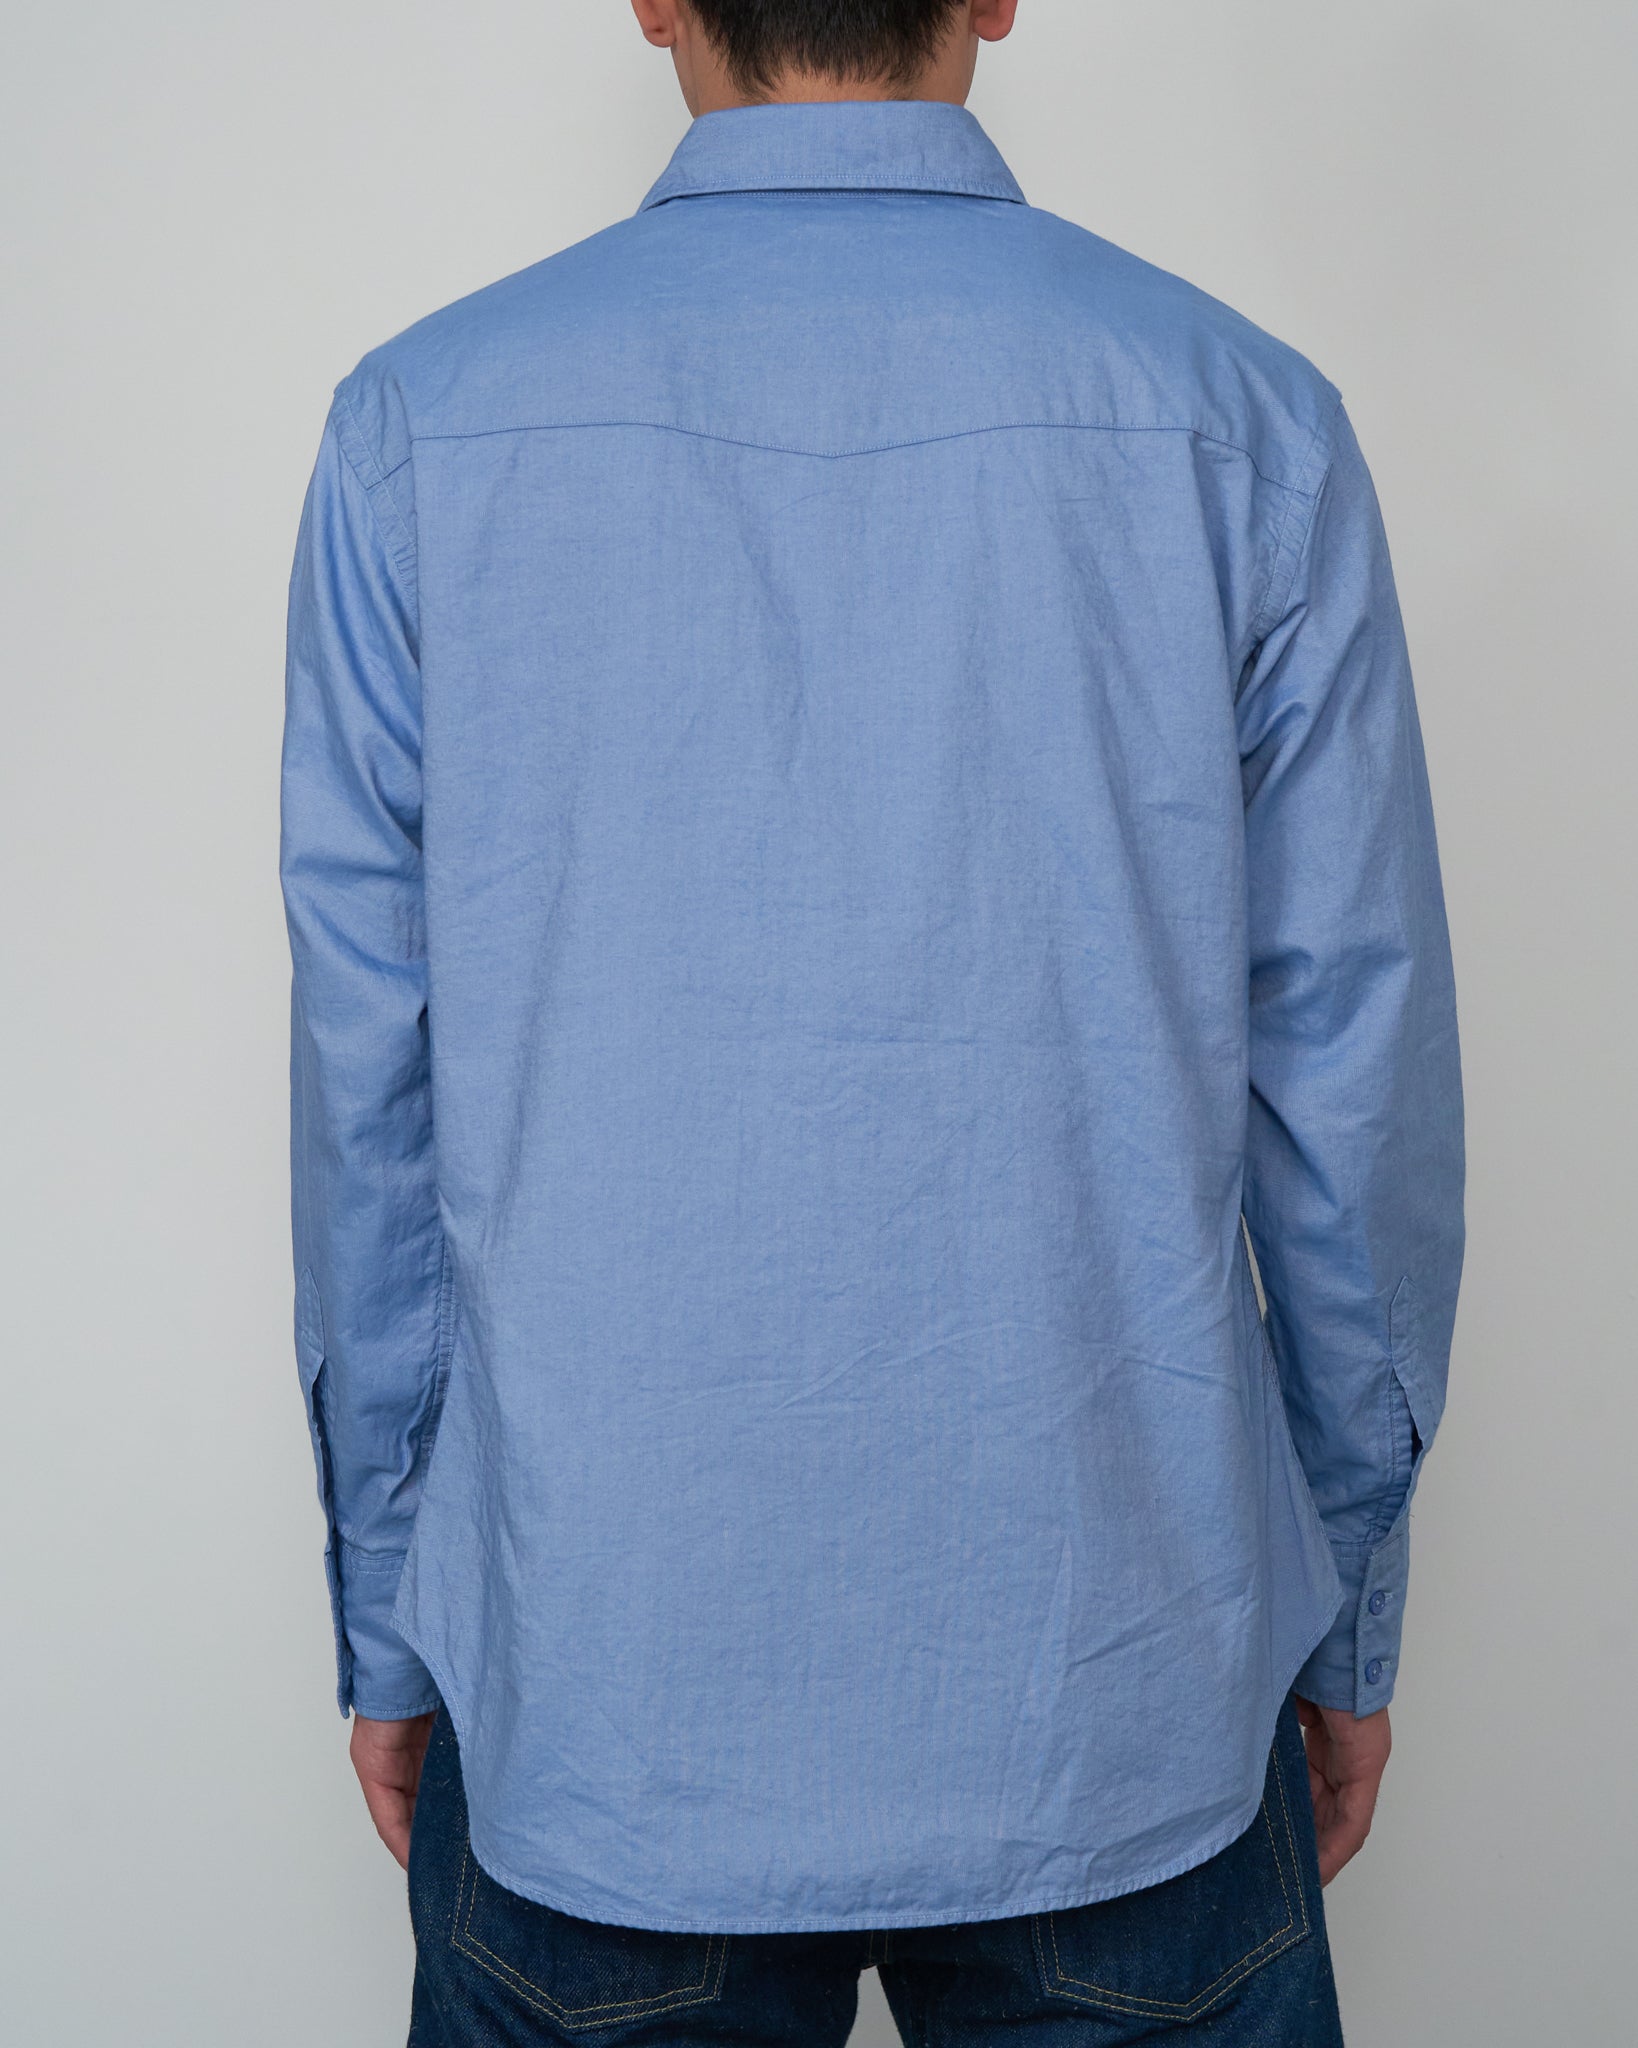 S H WSTN-003 Western Shirt, Blue